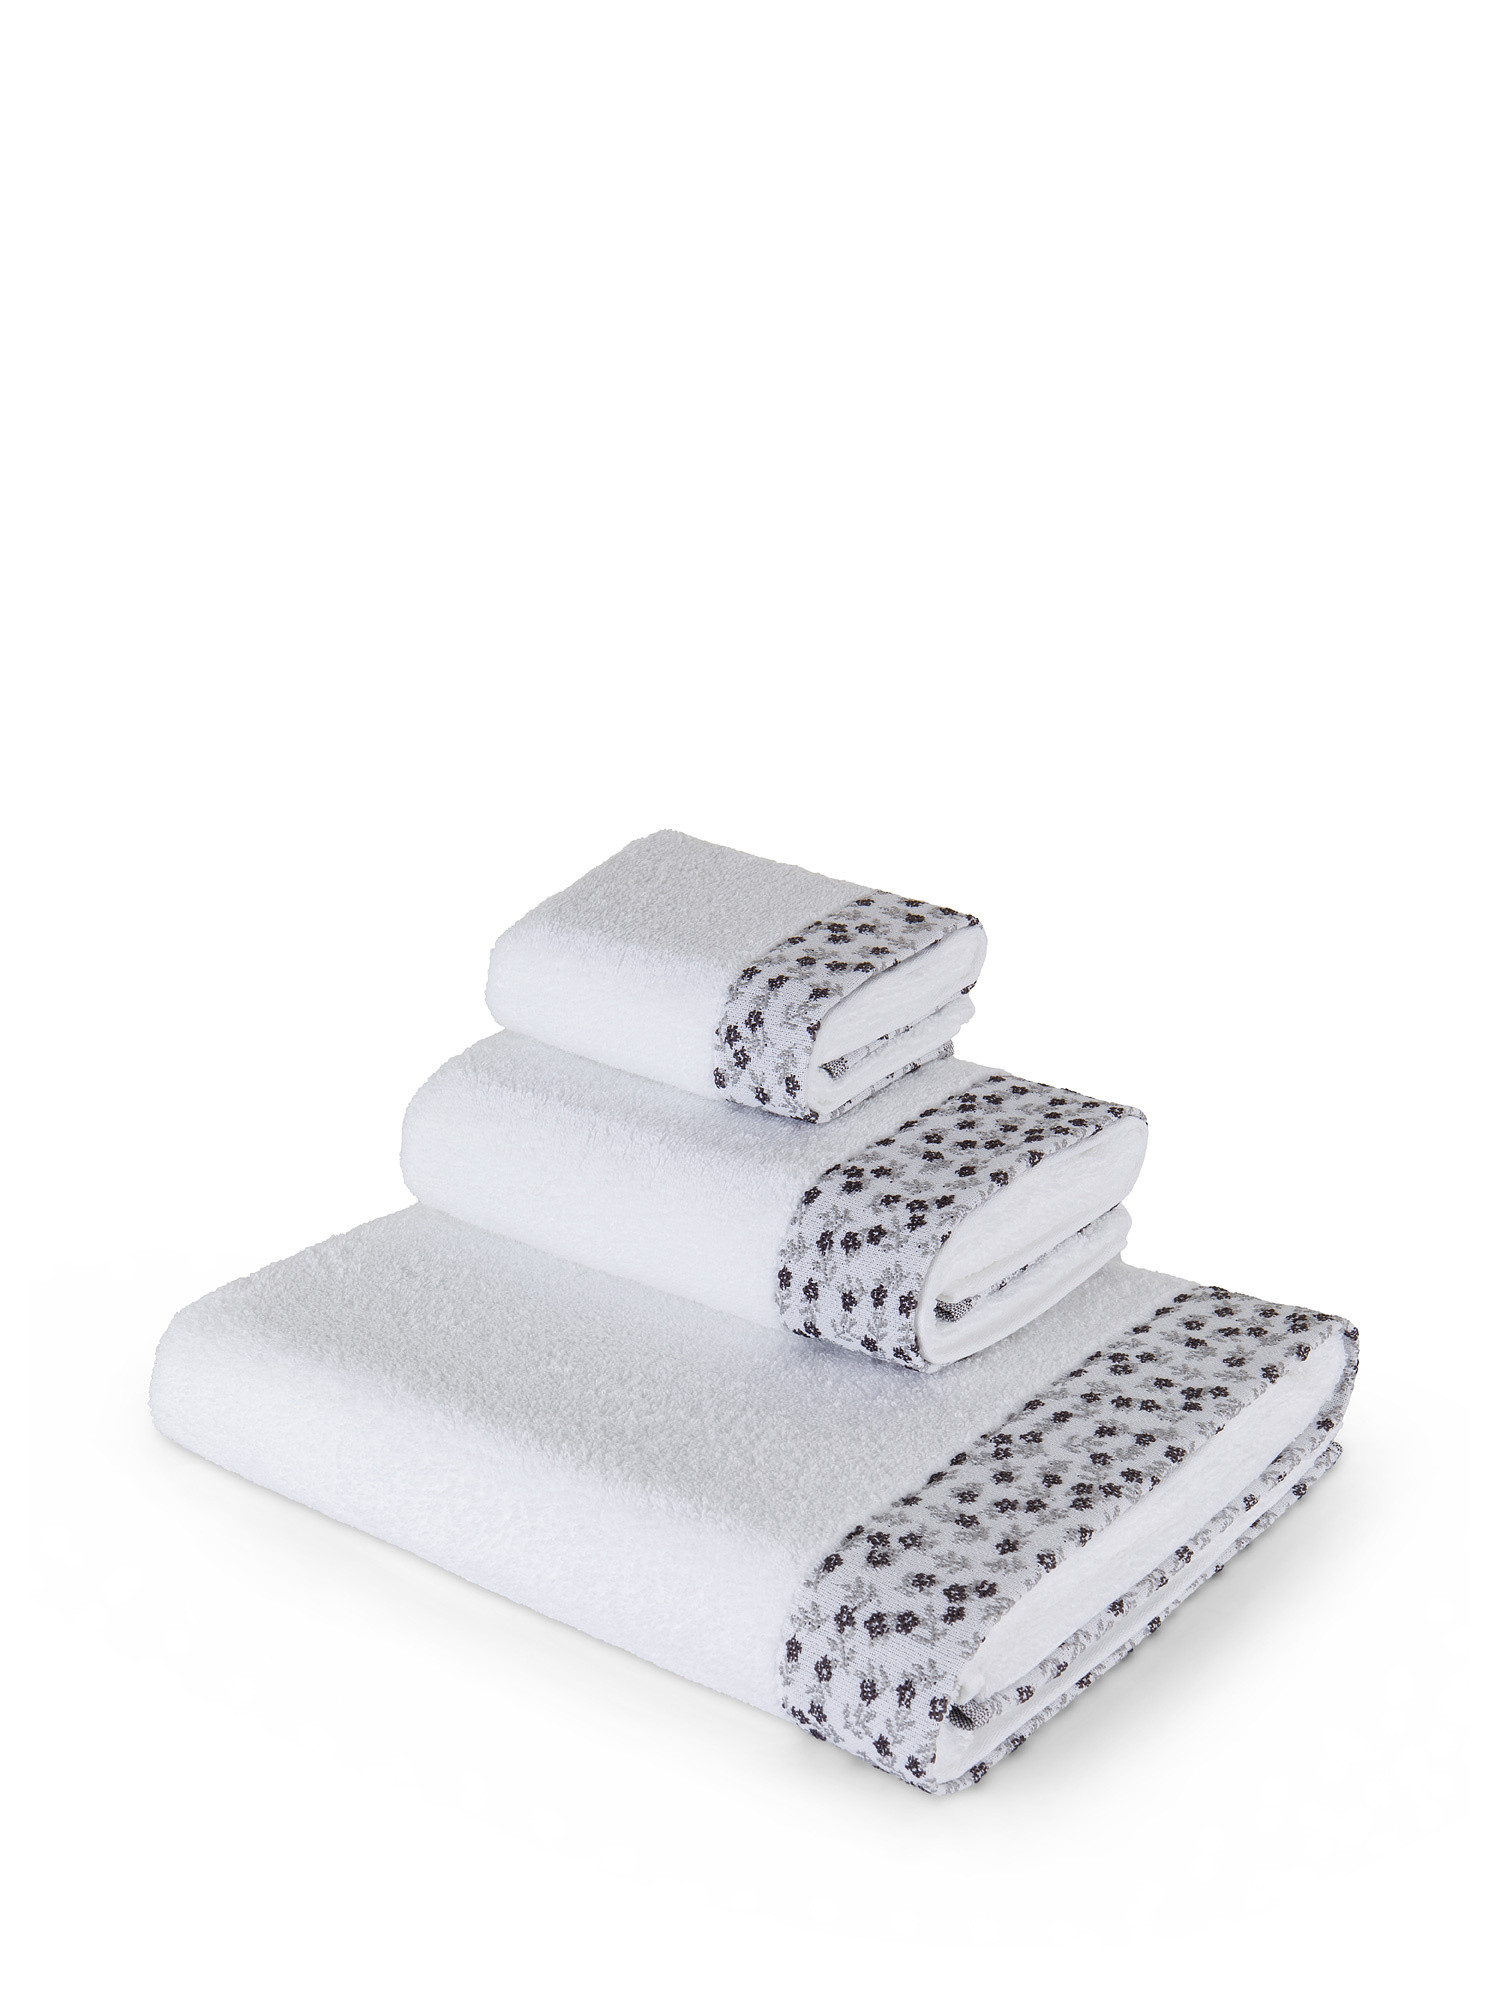 Asciugamano spugna di cotone bordo floreale, Bianco, large